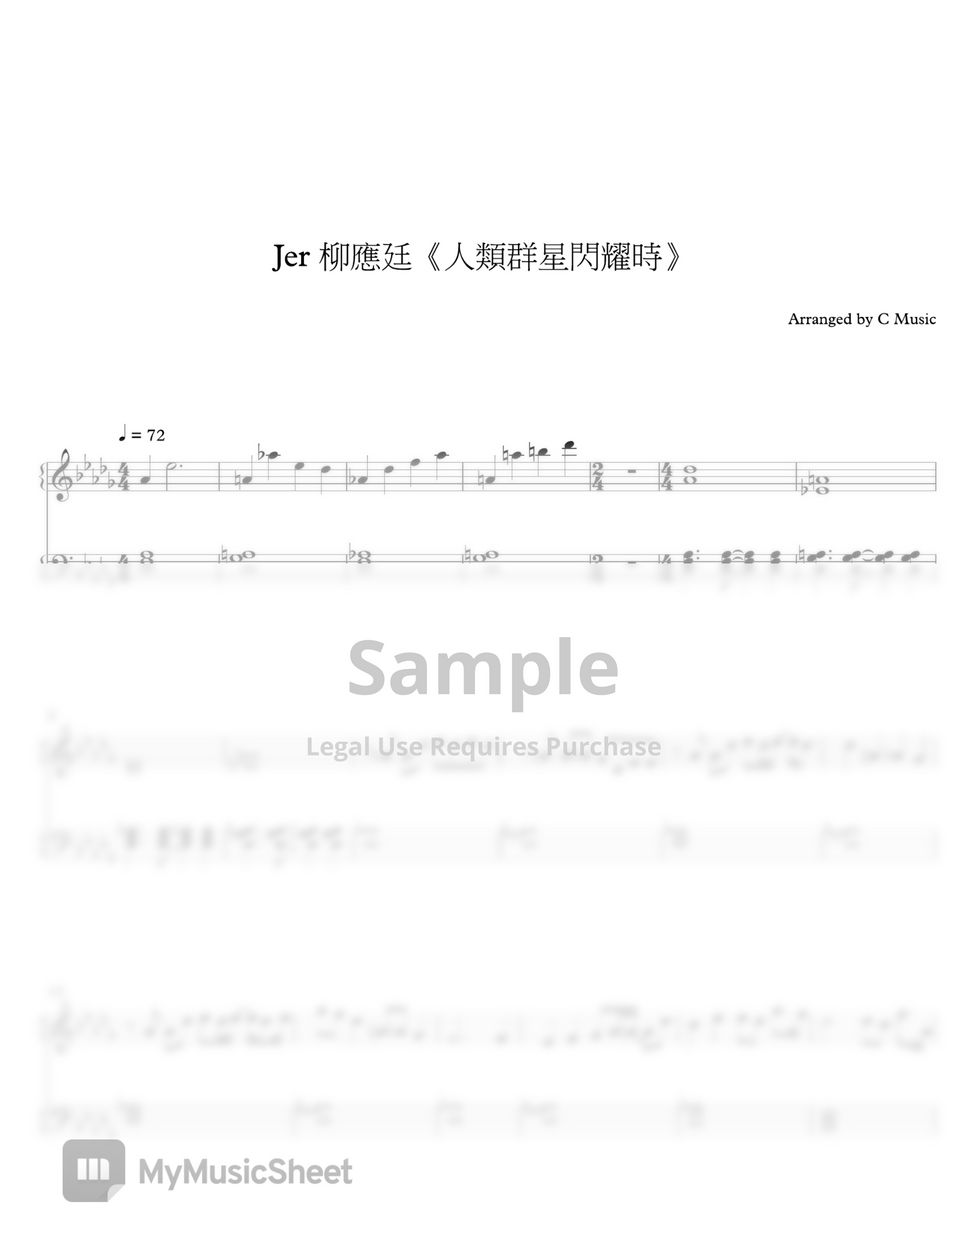 Jer Lau 柳應廷 - 人類群星閃耀時 by C Music